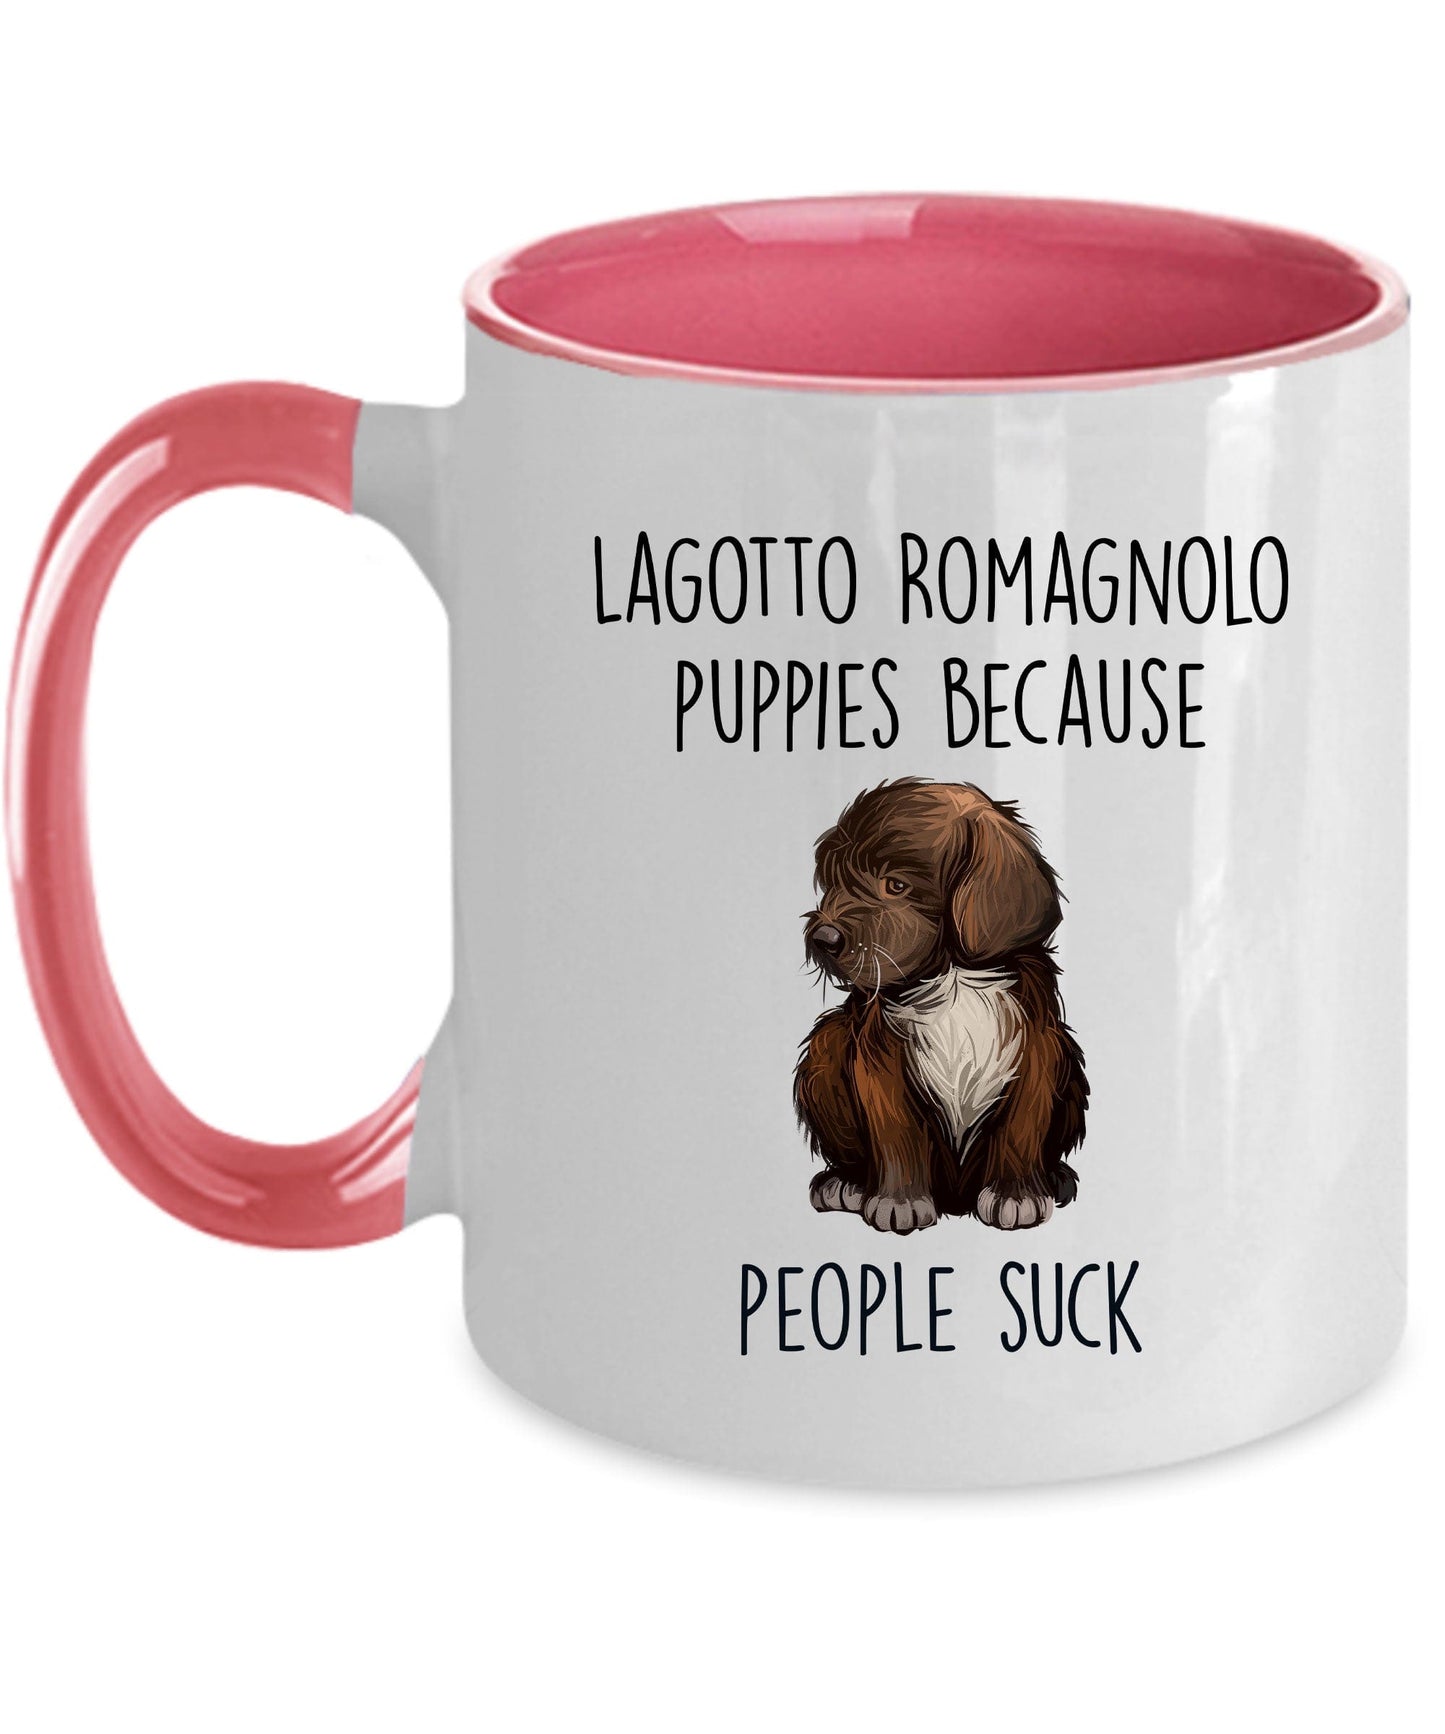 Lagotto Romagnolo Dog Lover ceramic coffee mug - Lagotto Romagnolo puppies because people suck